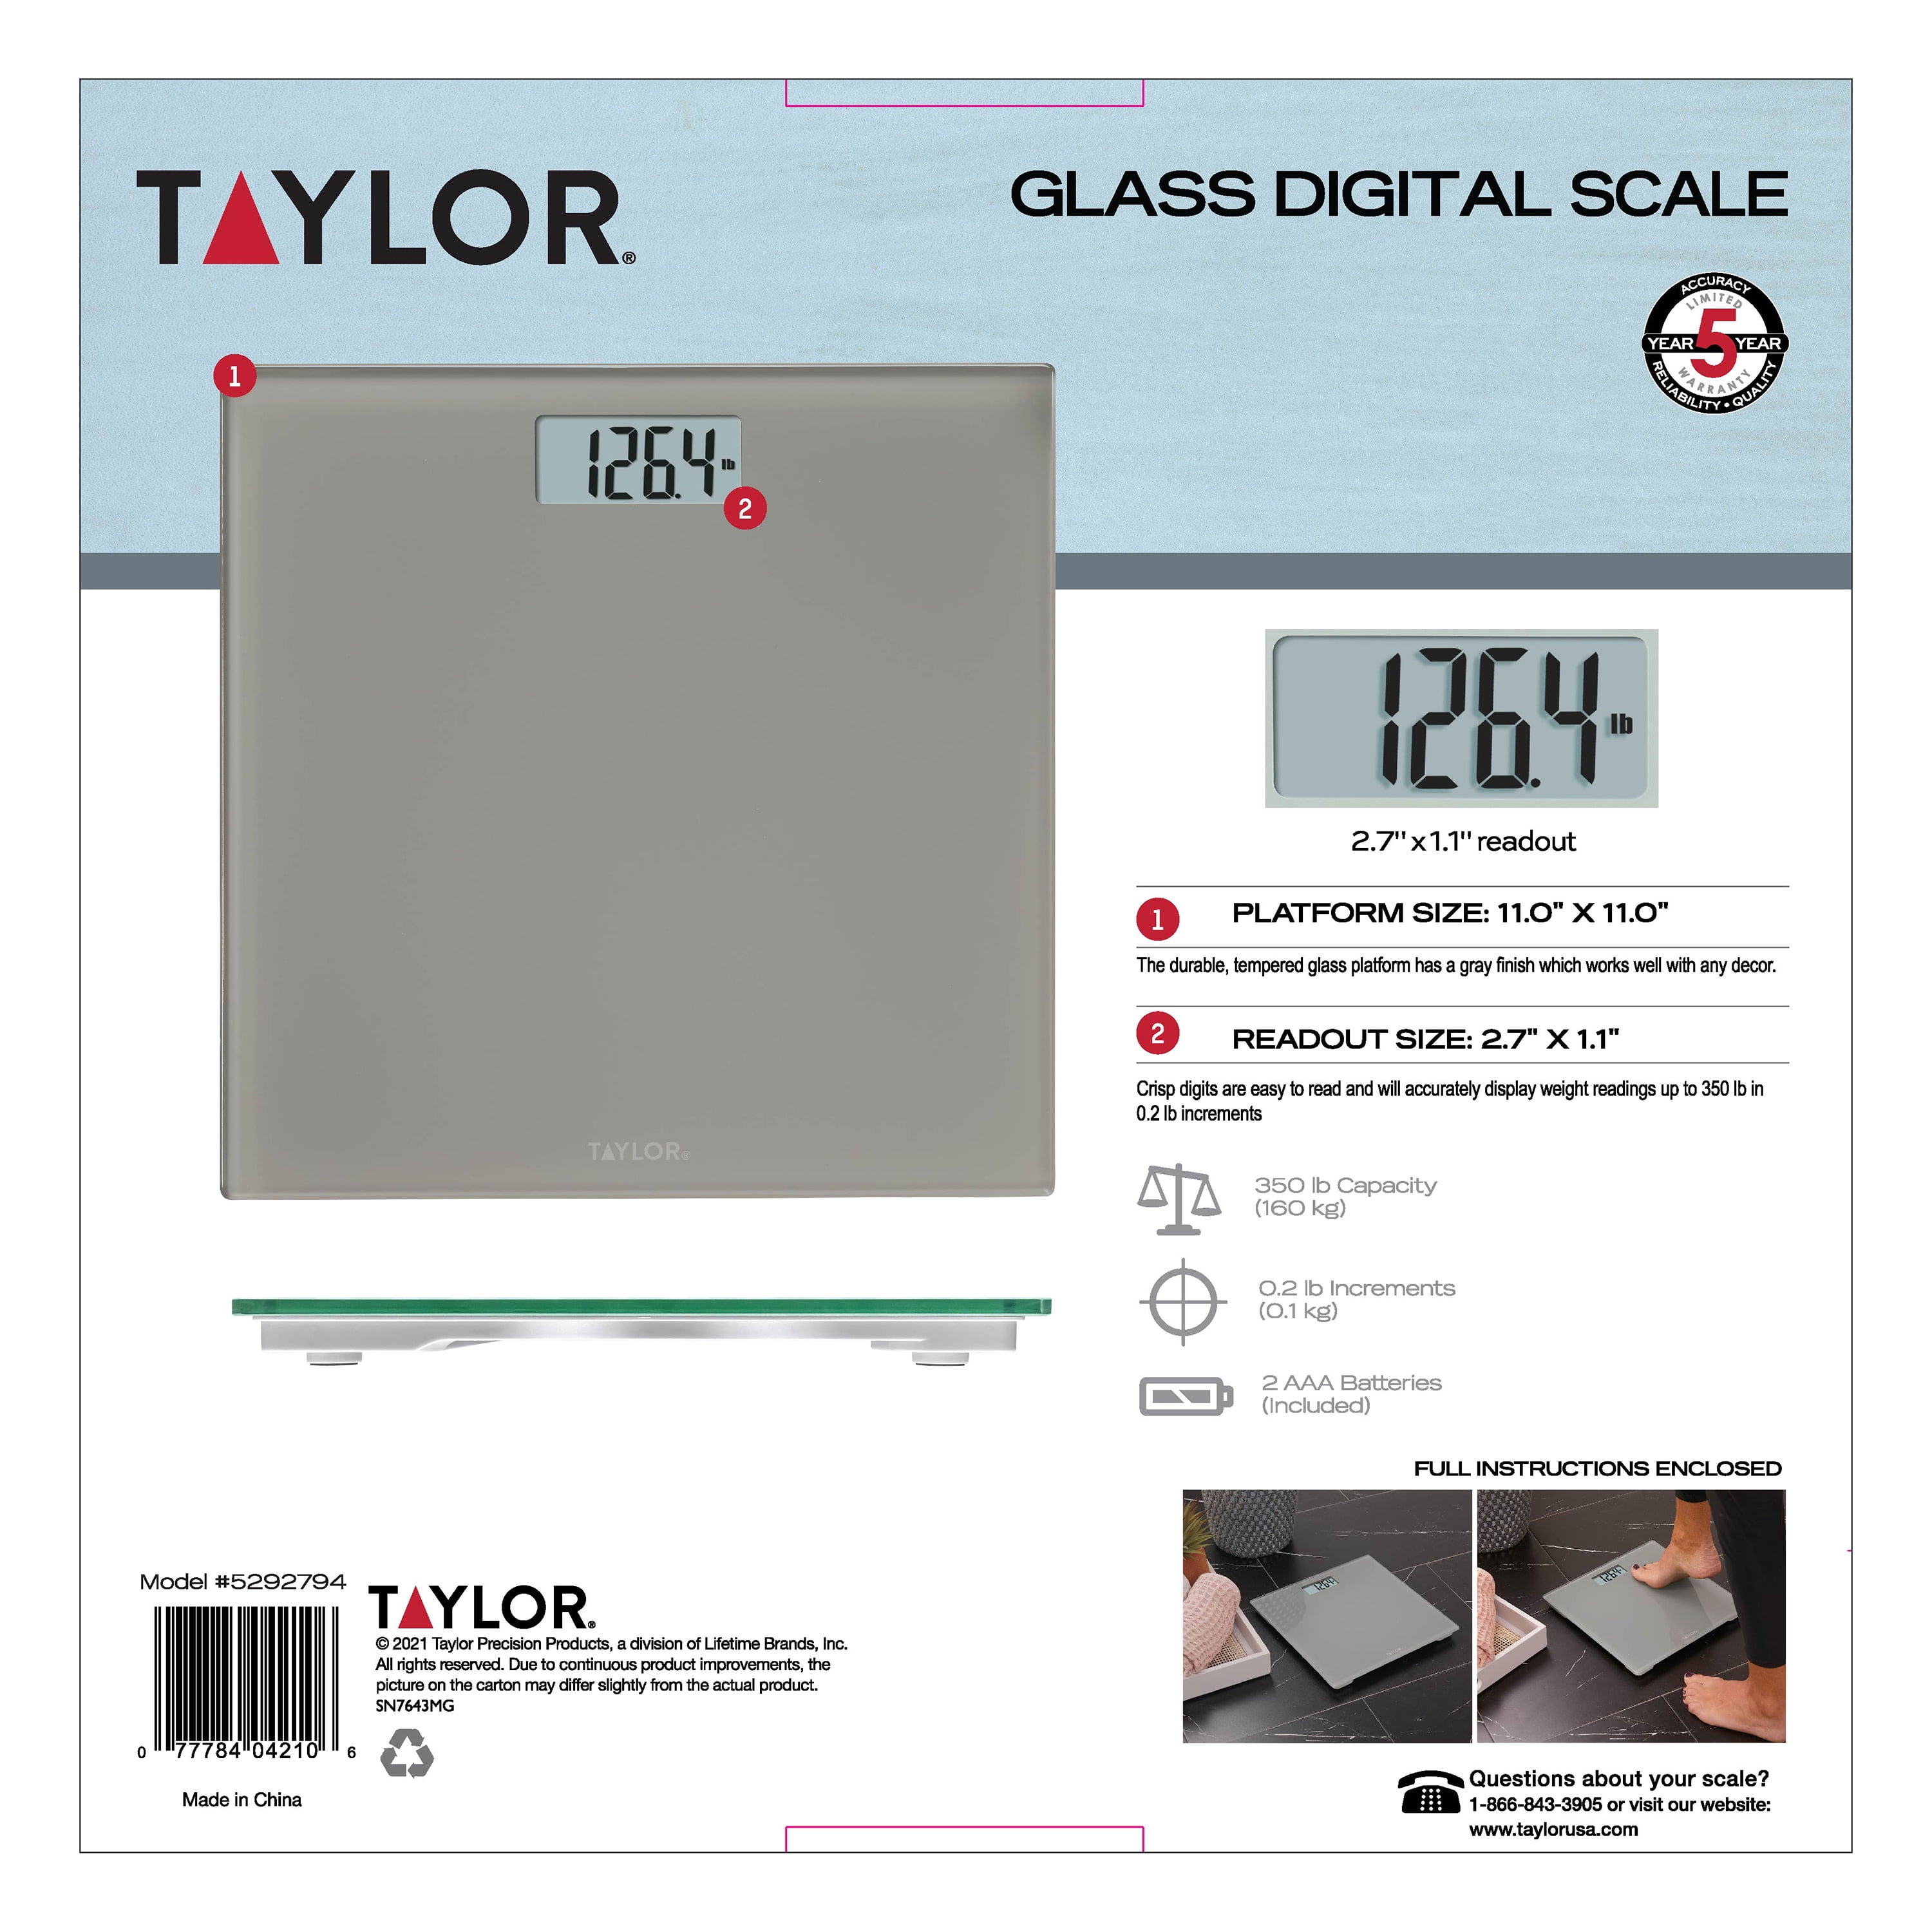 TAYLOR GLASS DIGITAL SCALE 500LB Capacity CARBON FIBER FINISH BLACK open box